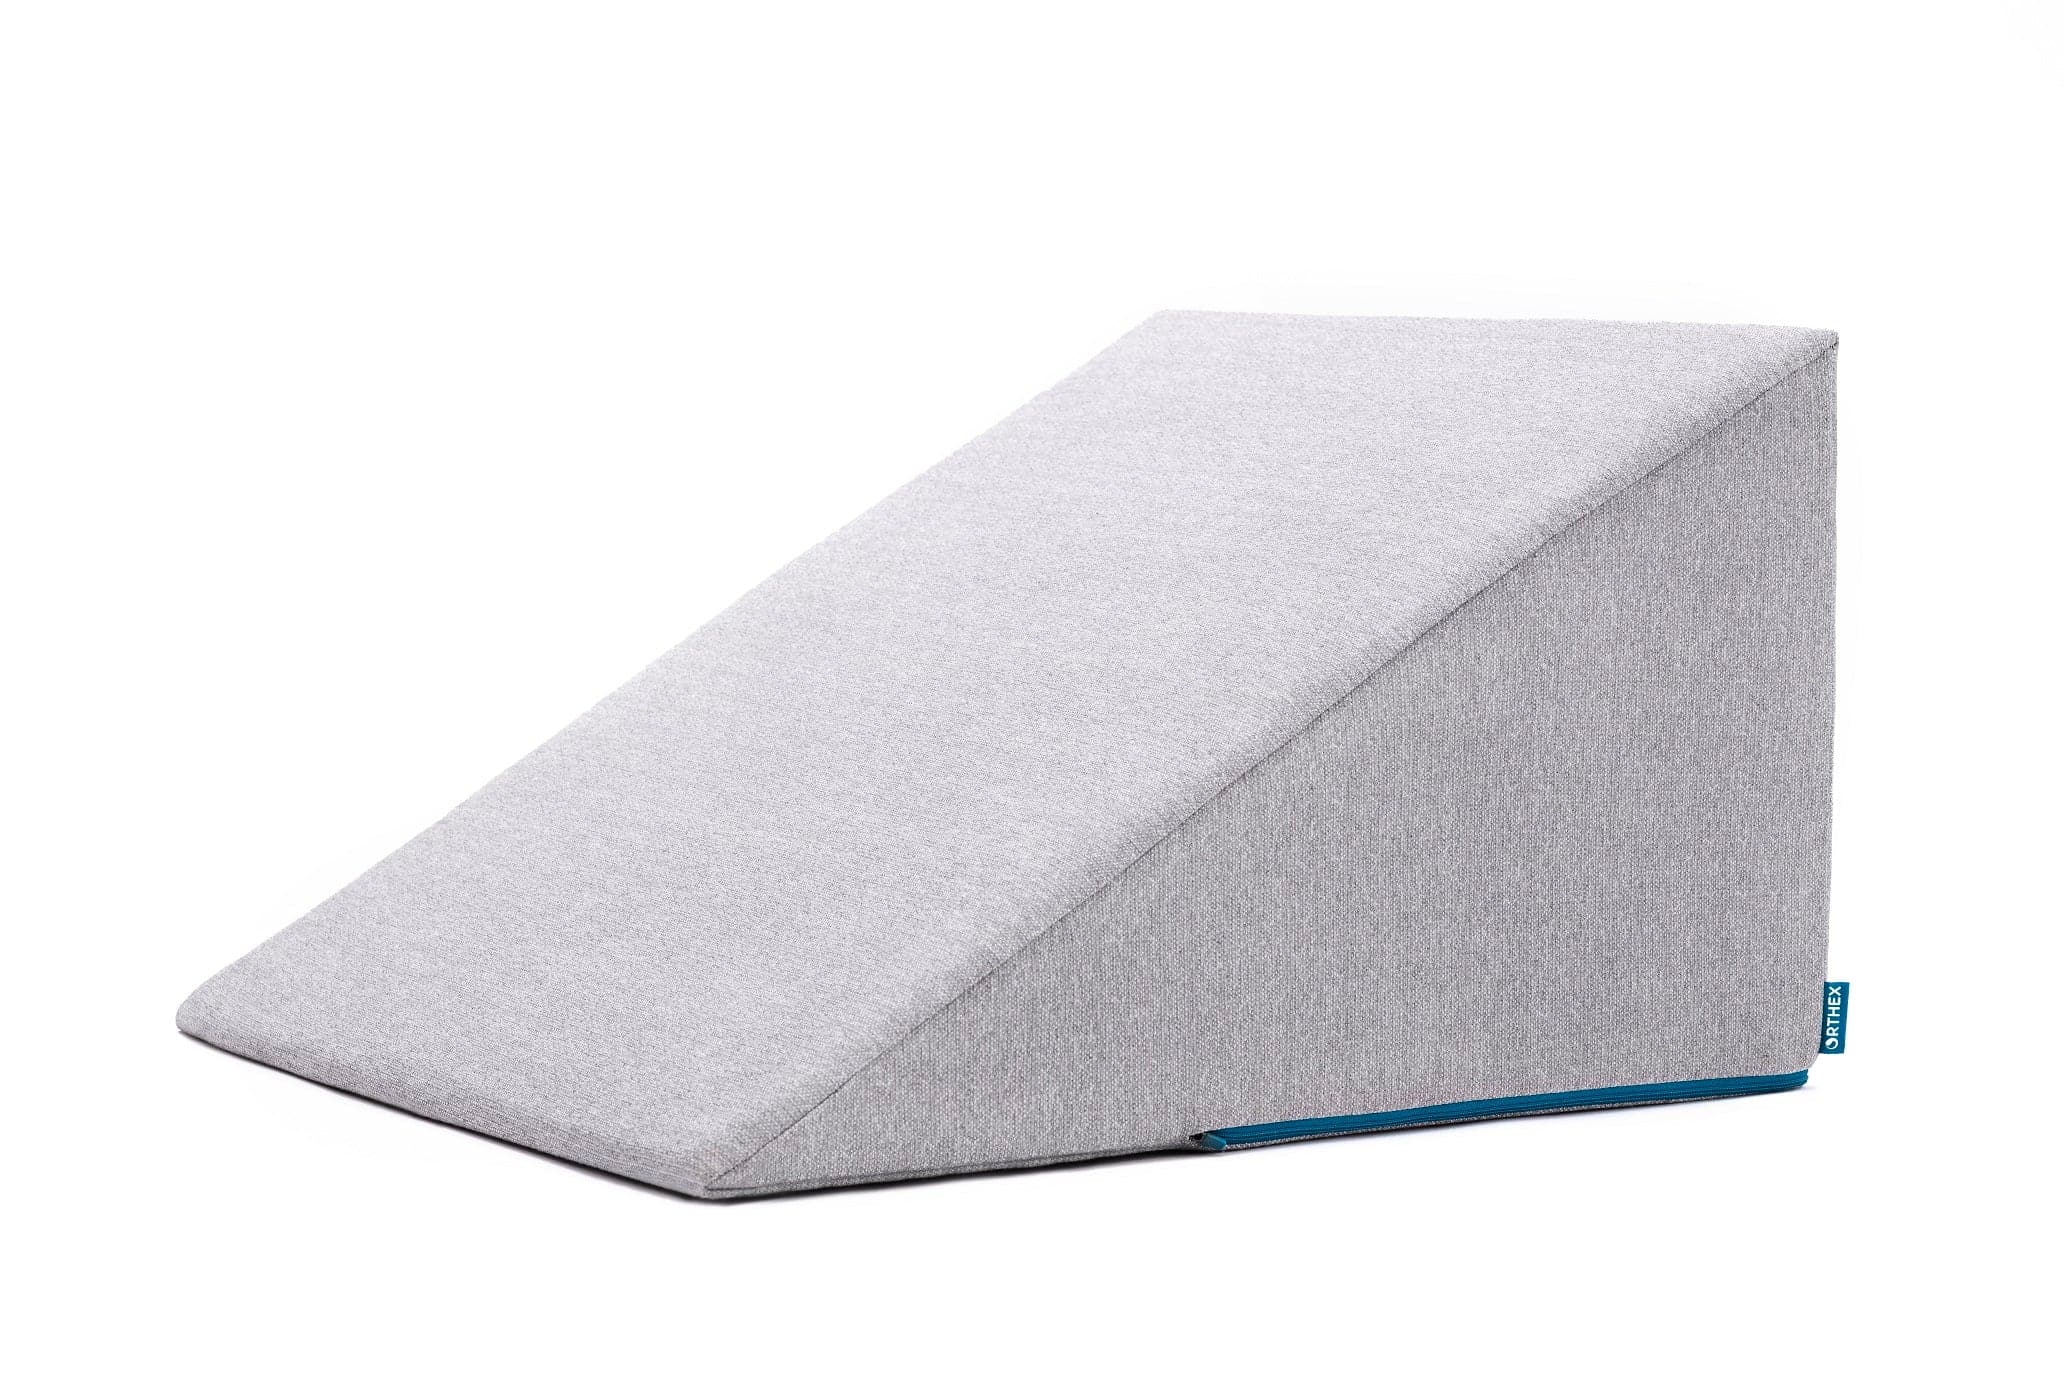 2pairs Sponge Shoulder Pads Anti-slip Shoulder Cushions Wedge Shape, Black  & White